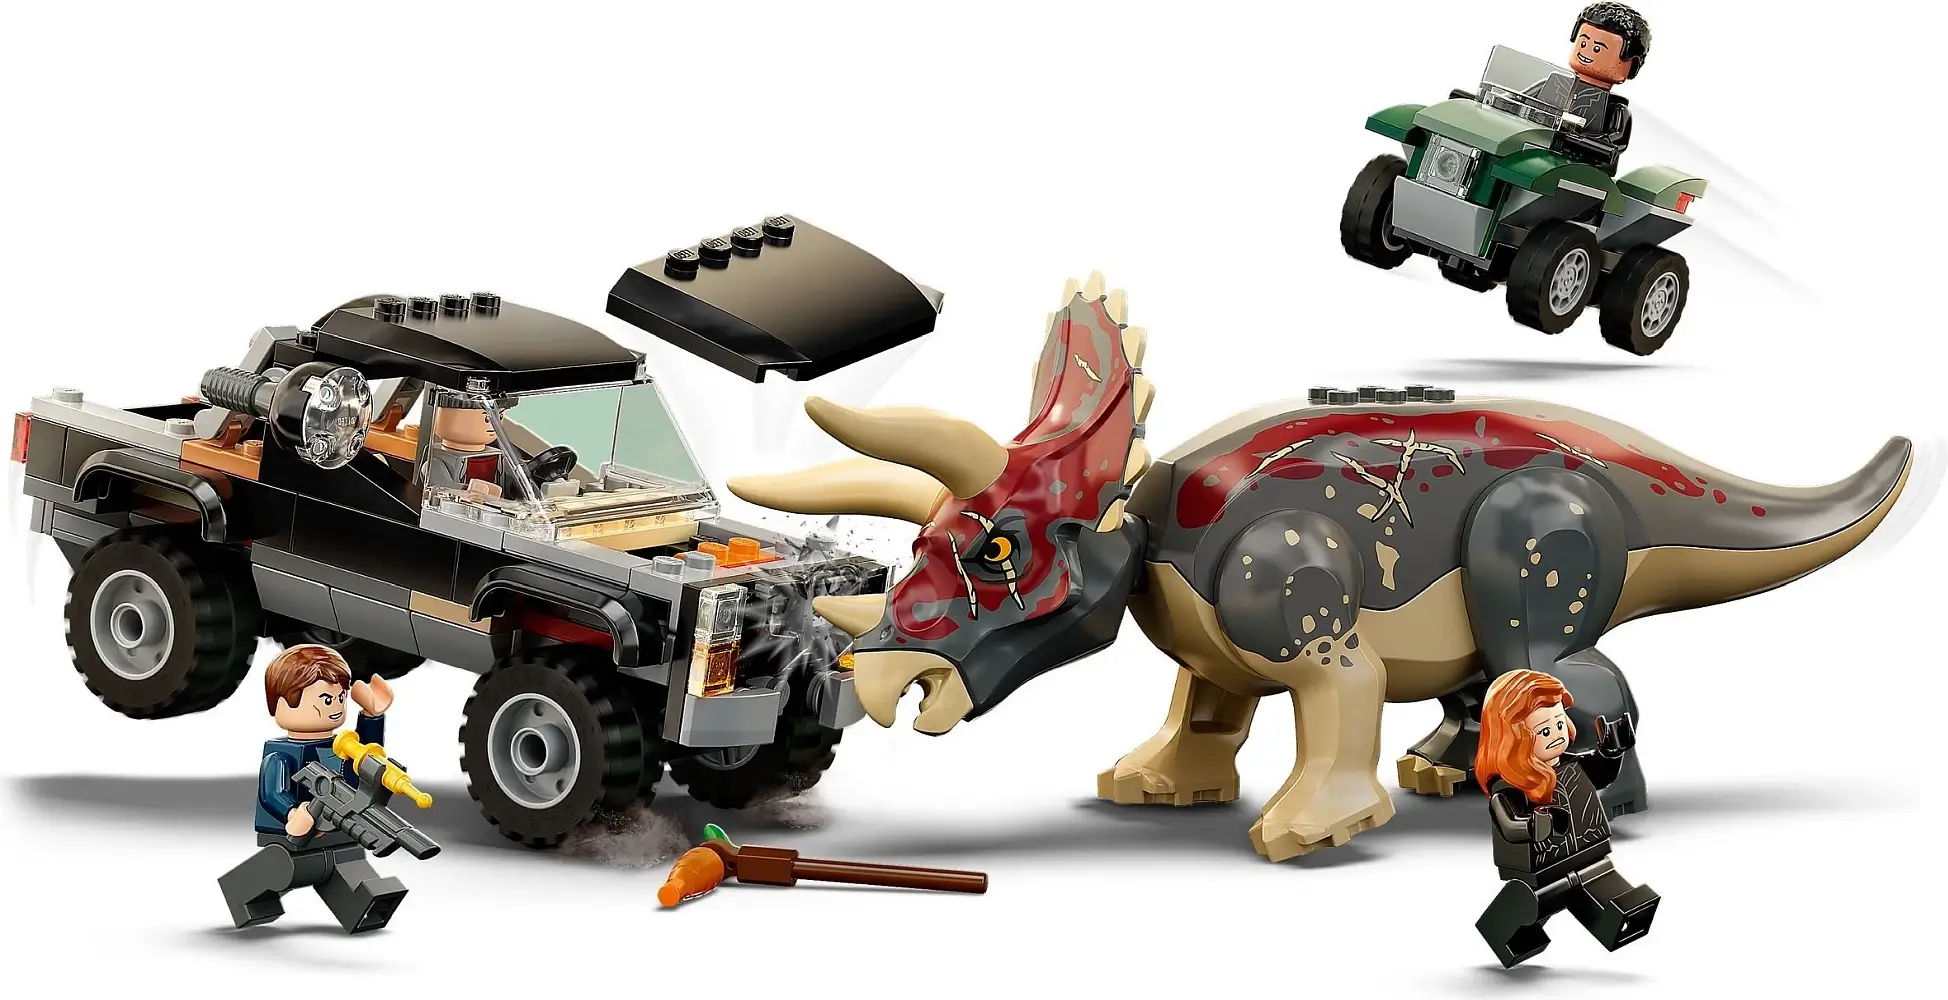 Zasadzka pick-upen na dinozaura Triceratopsa z serii LEGO® Jurassic World™